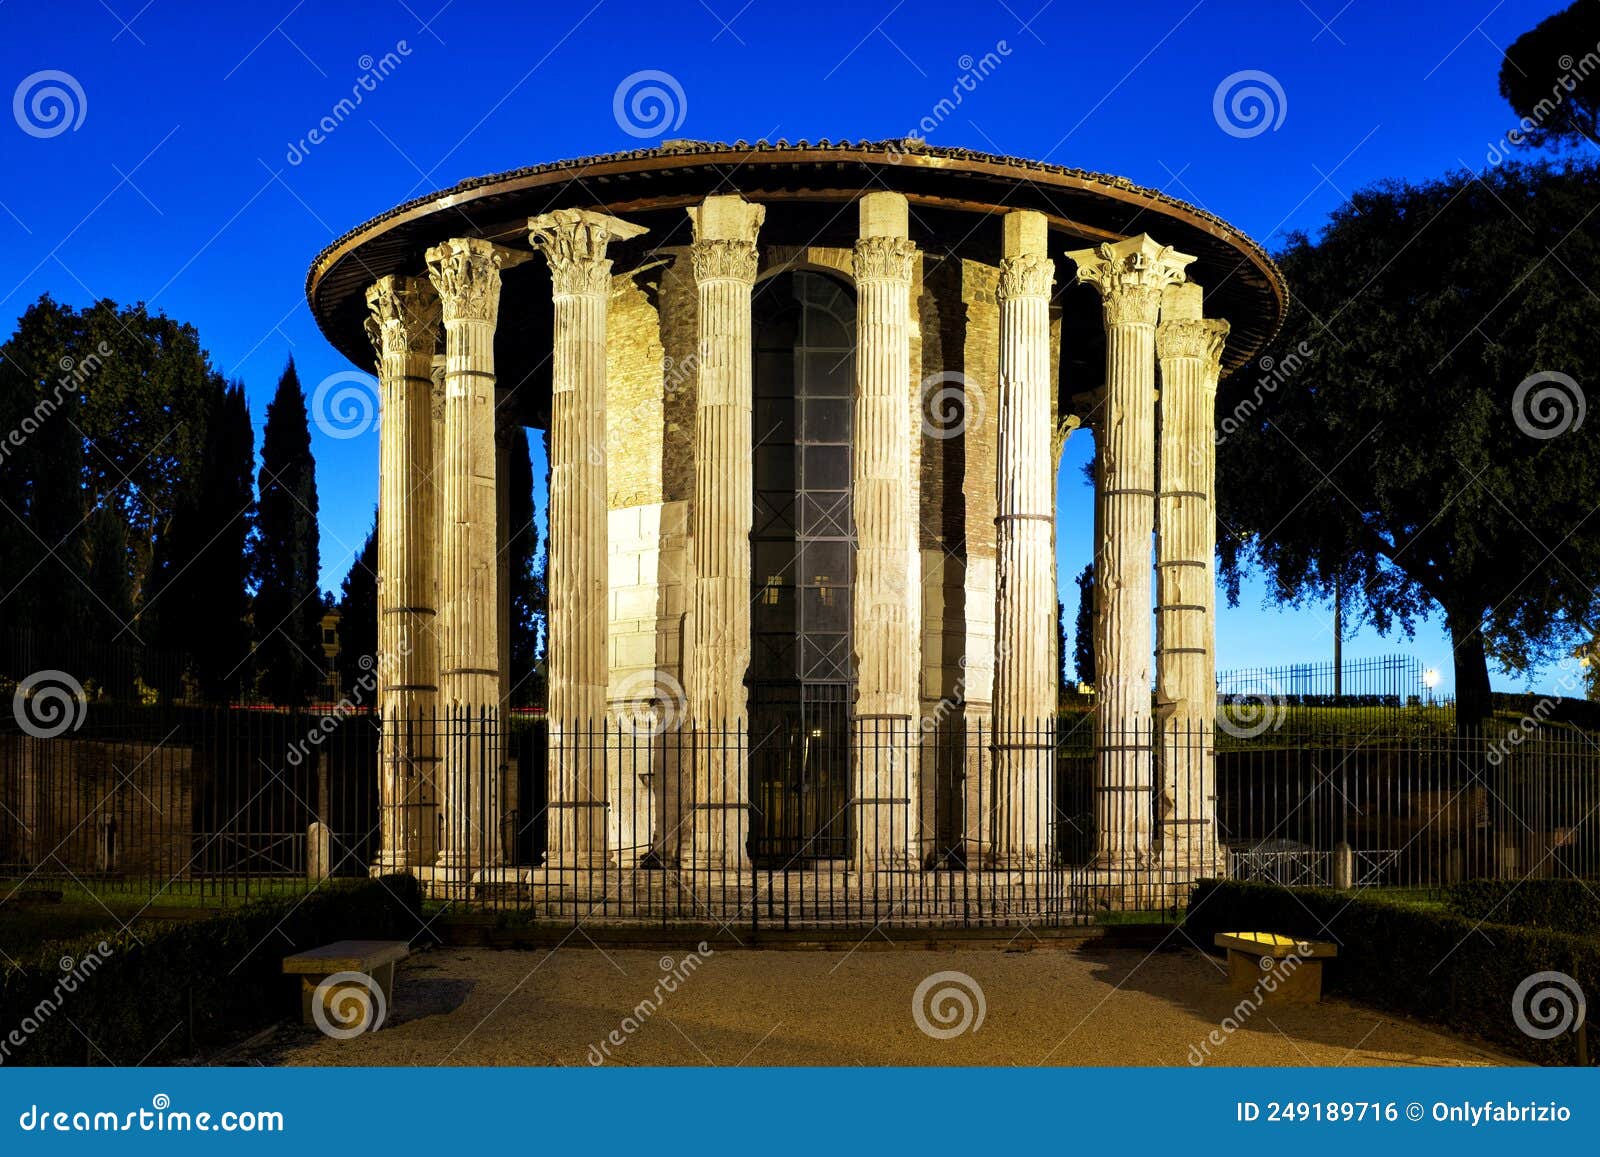 temple of hercules victor